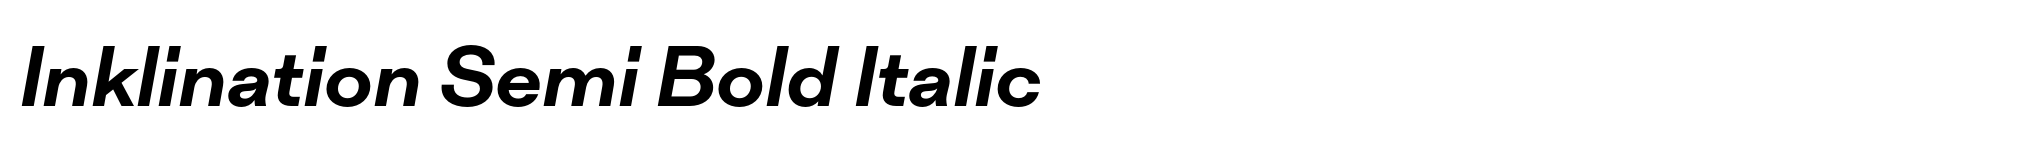 Inklination Semi Bold Italic image